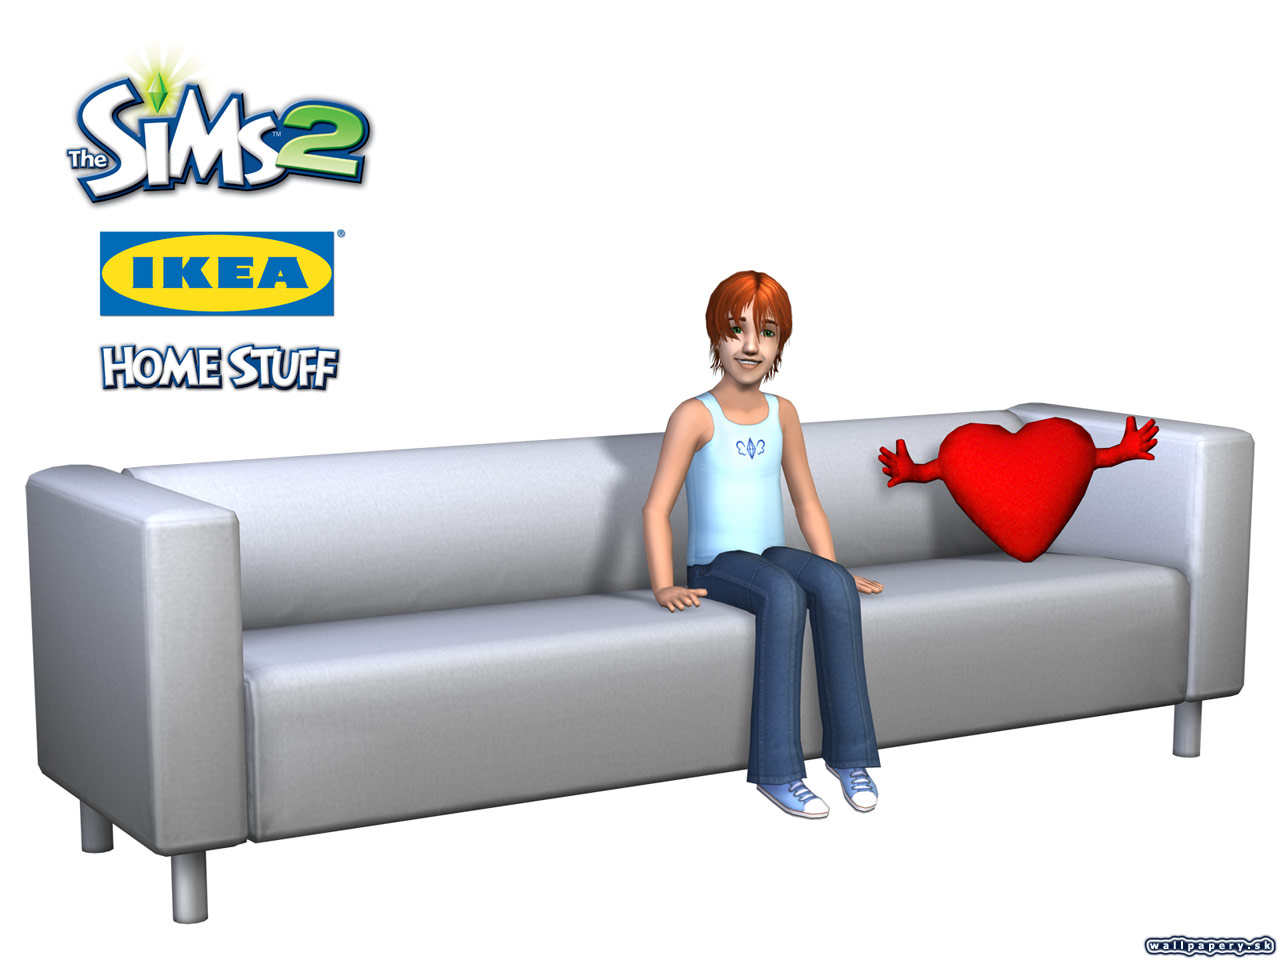 The Sims 2: IKEA Home Stuff - wallpaper 5